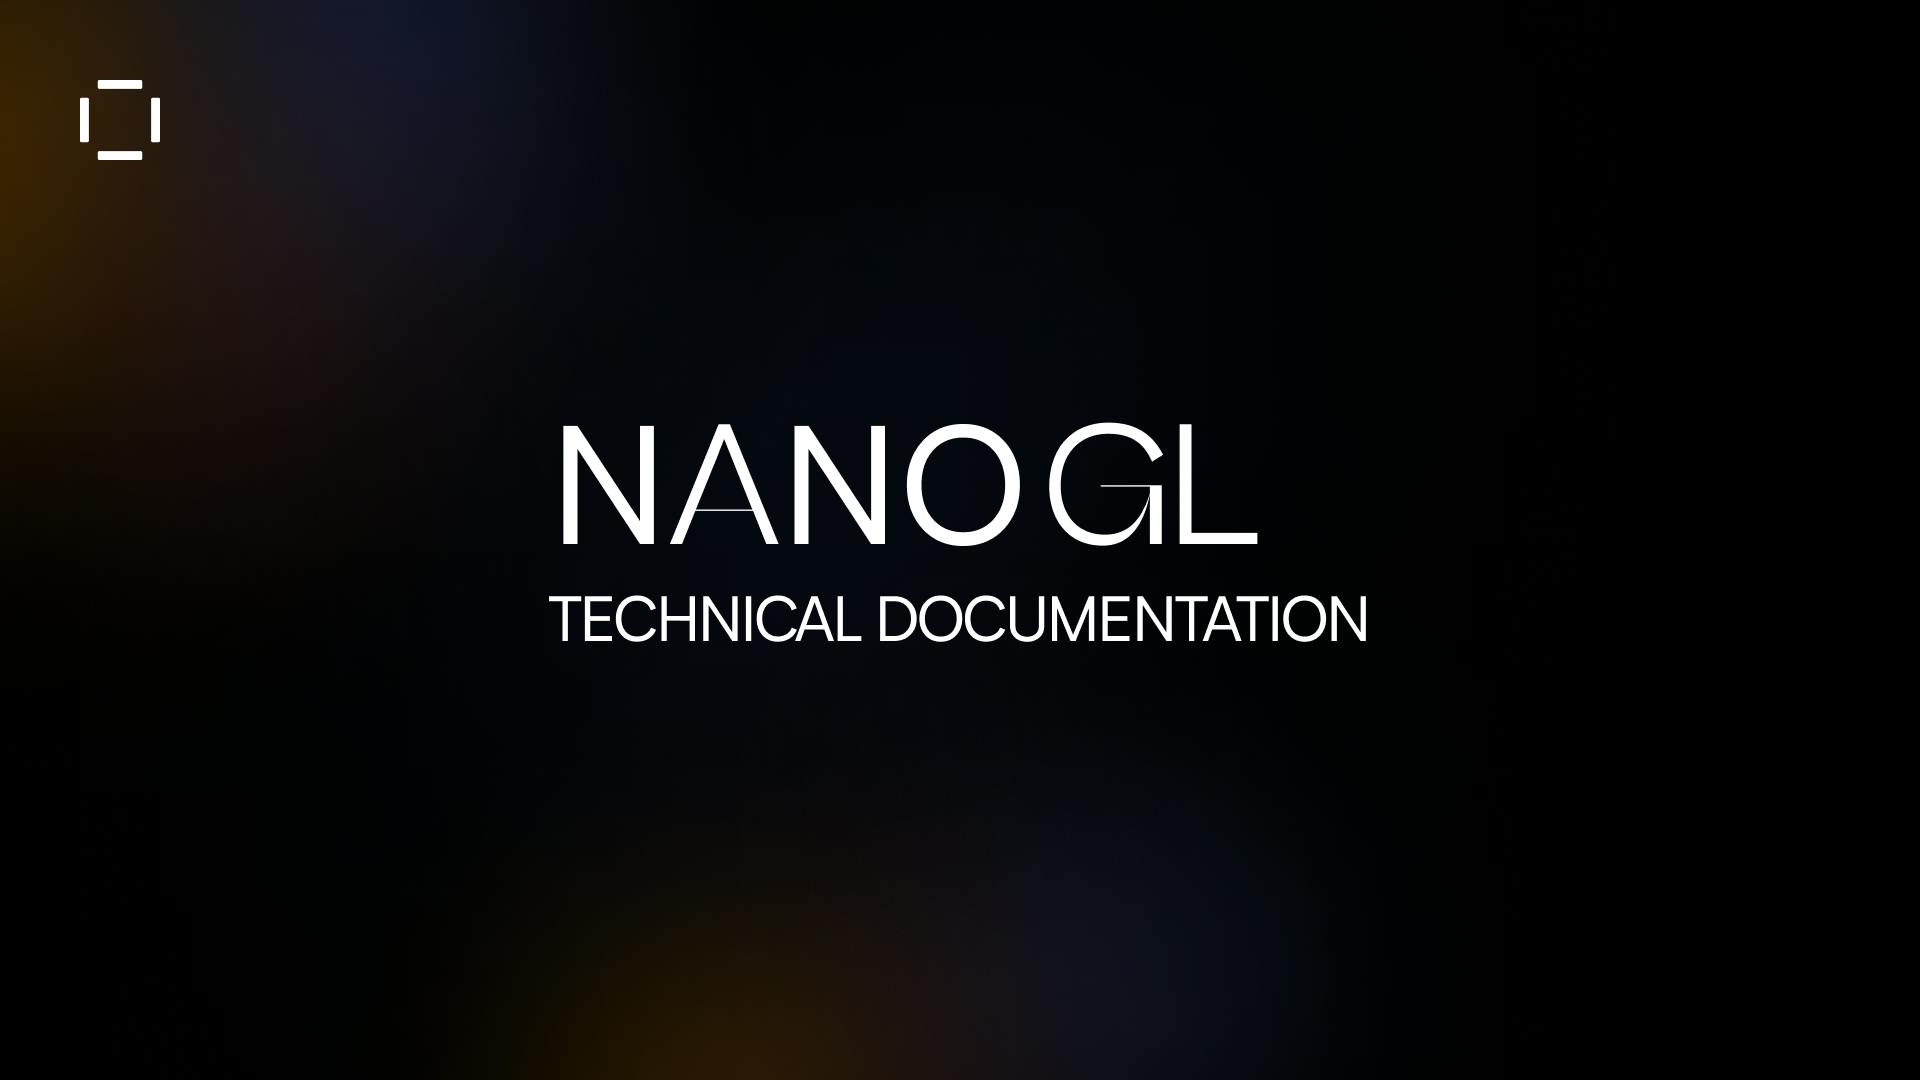 NanoGL Technical Documentation